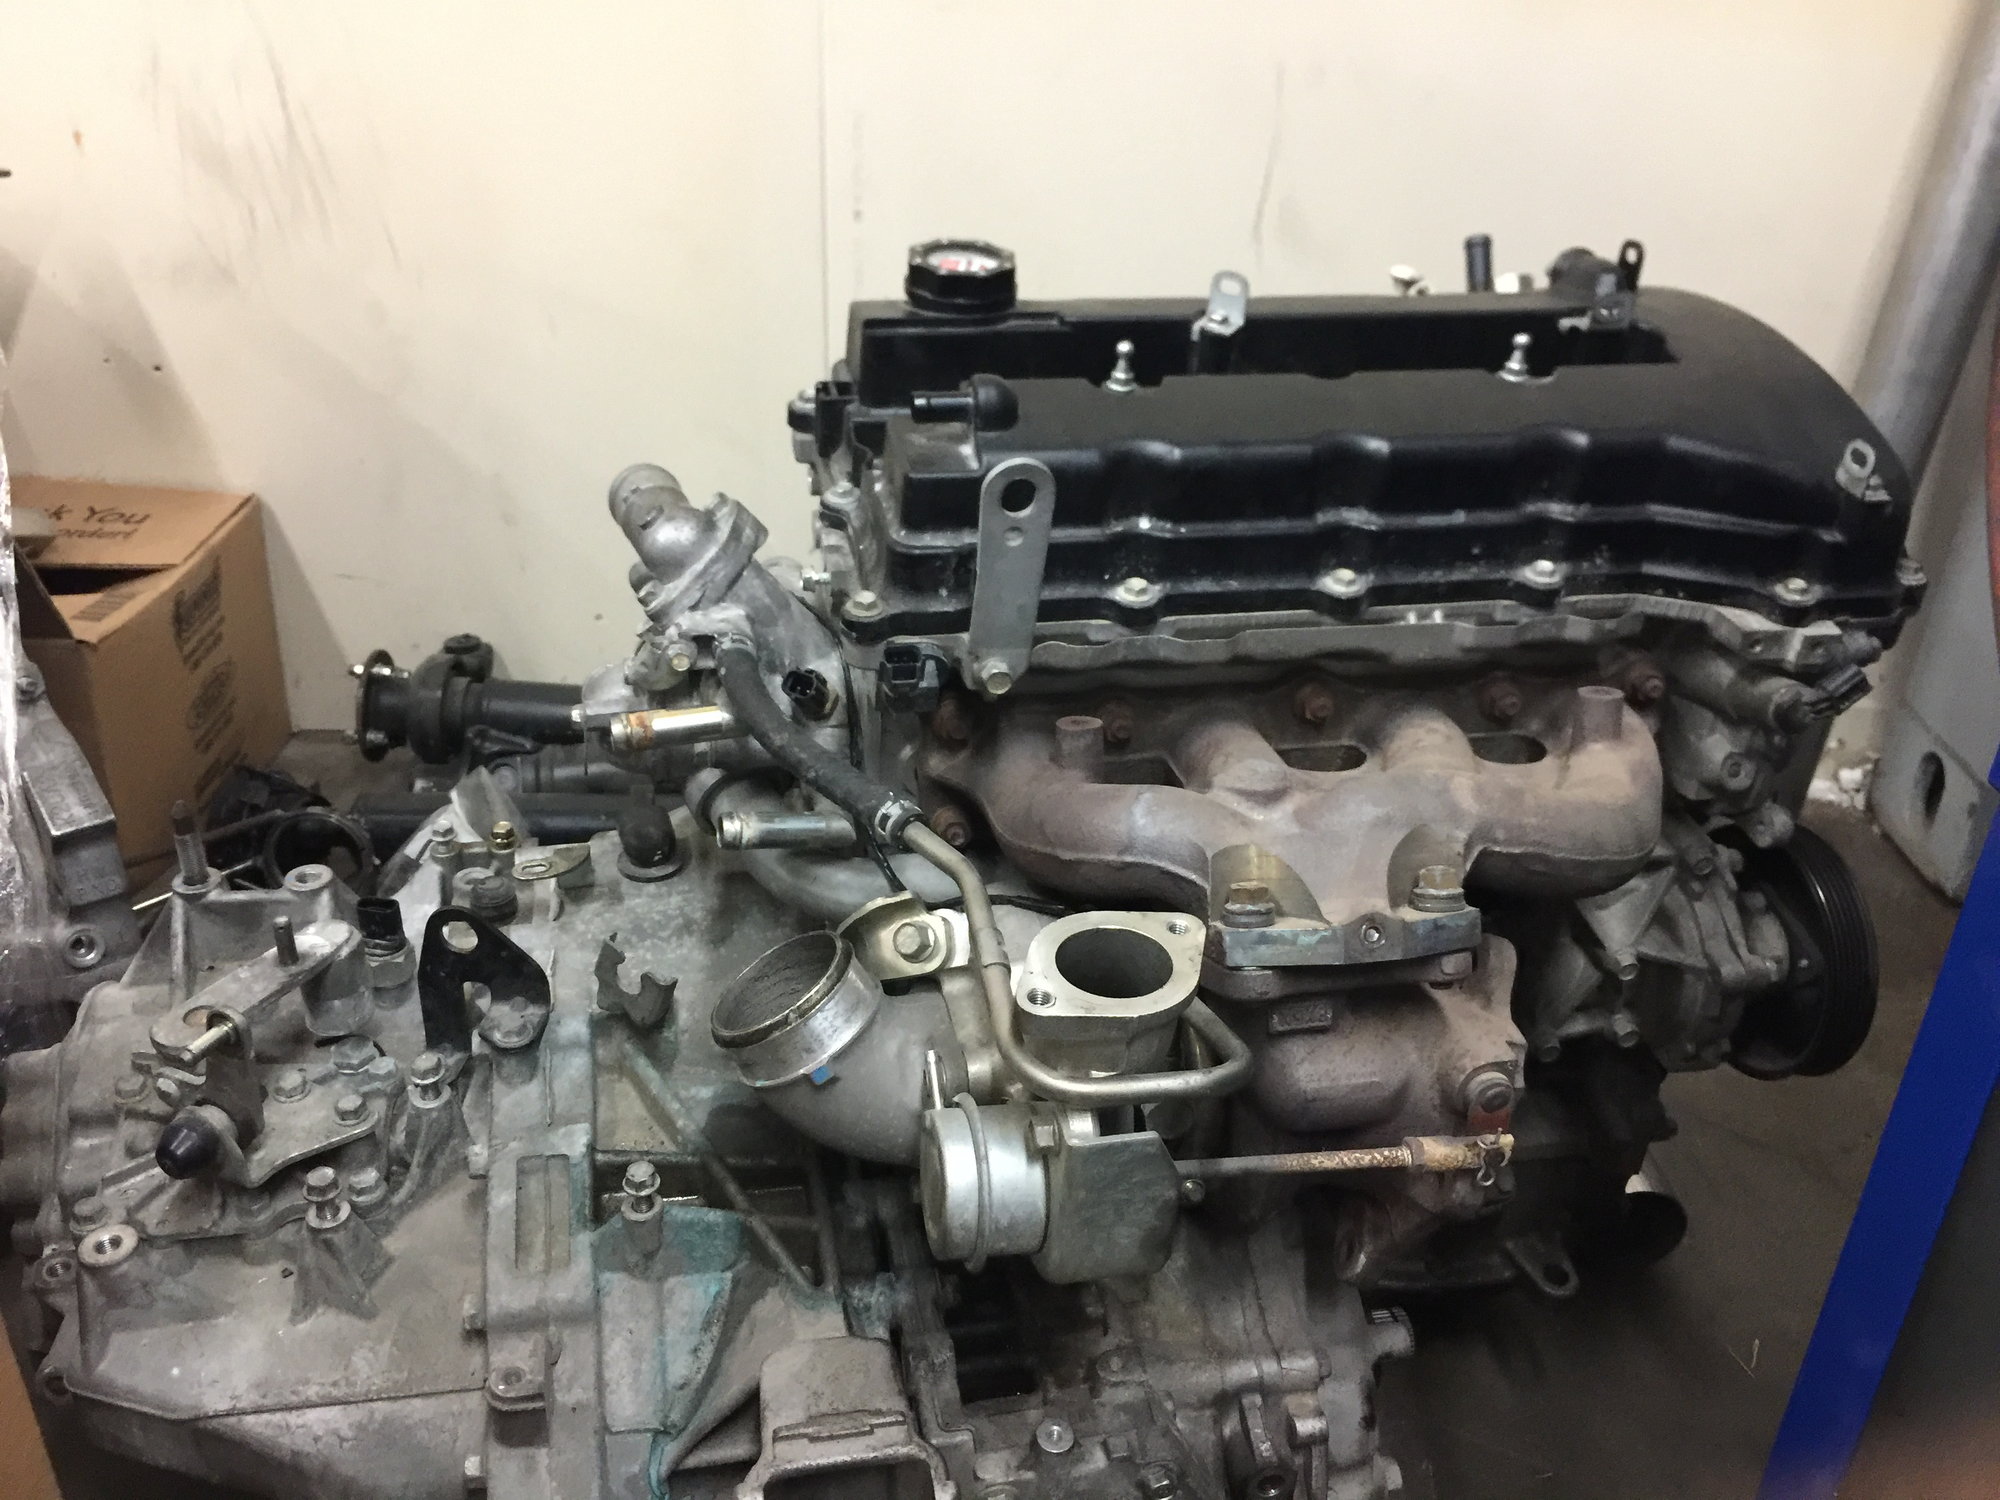 Engine - Complete - Evo x gsr 2011 engine and transmission complete 38k miles - Used - 2008 to 2015 Mitsubishi Lancer Evolution - West Covina, CA 91790, United States